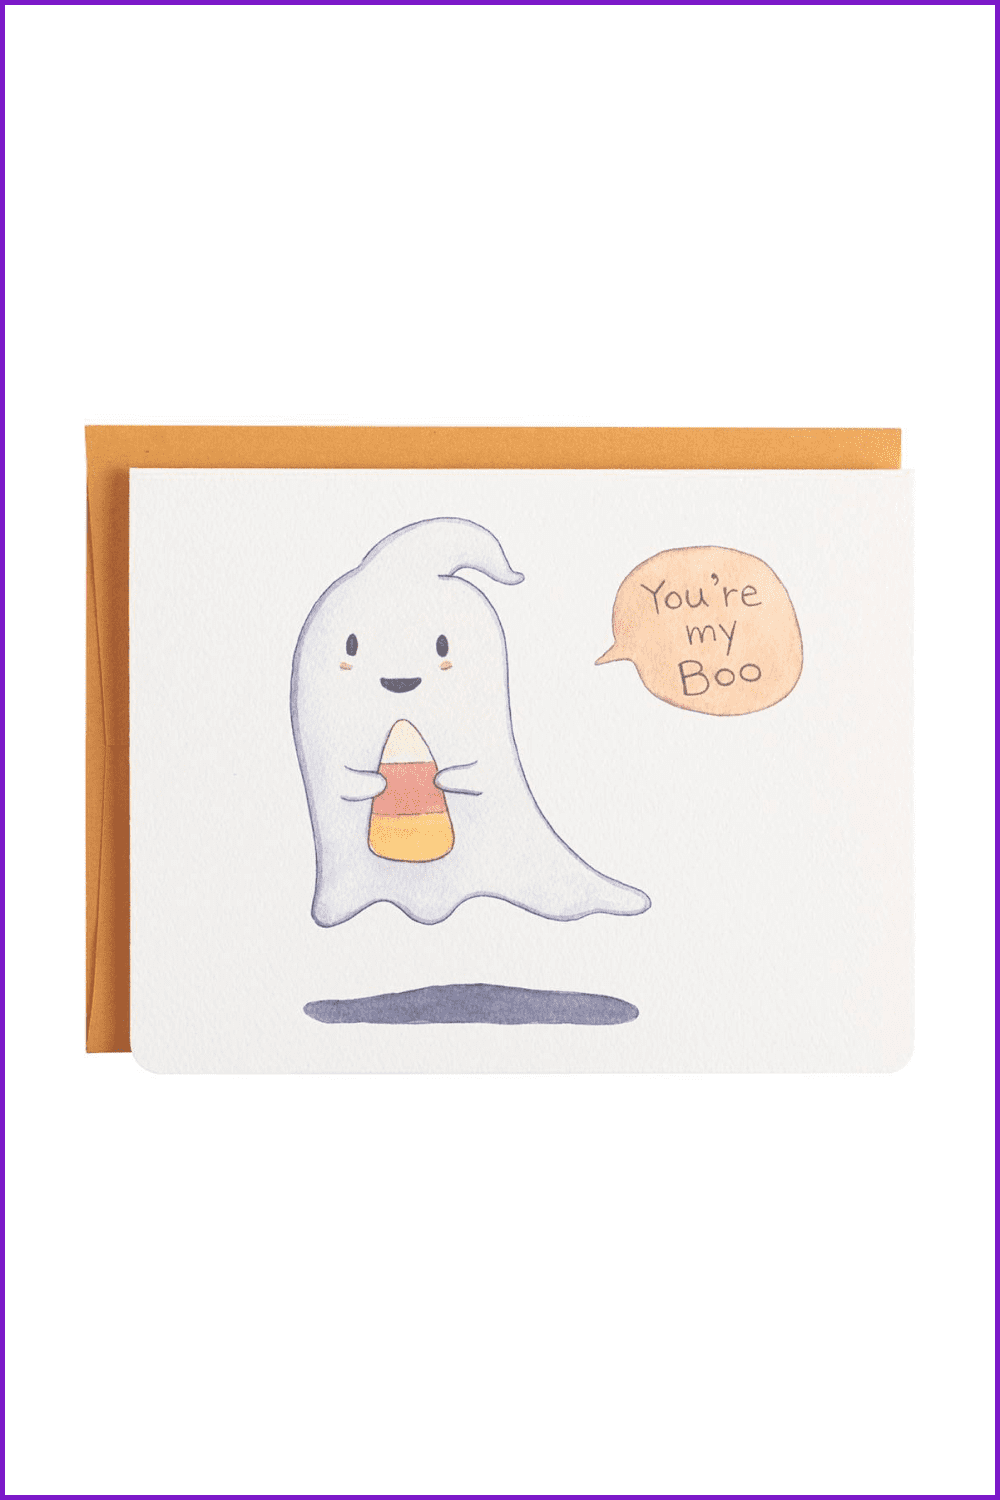 Drawn cute, funny ghost on a postcard.